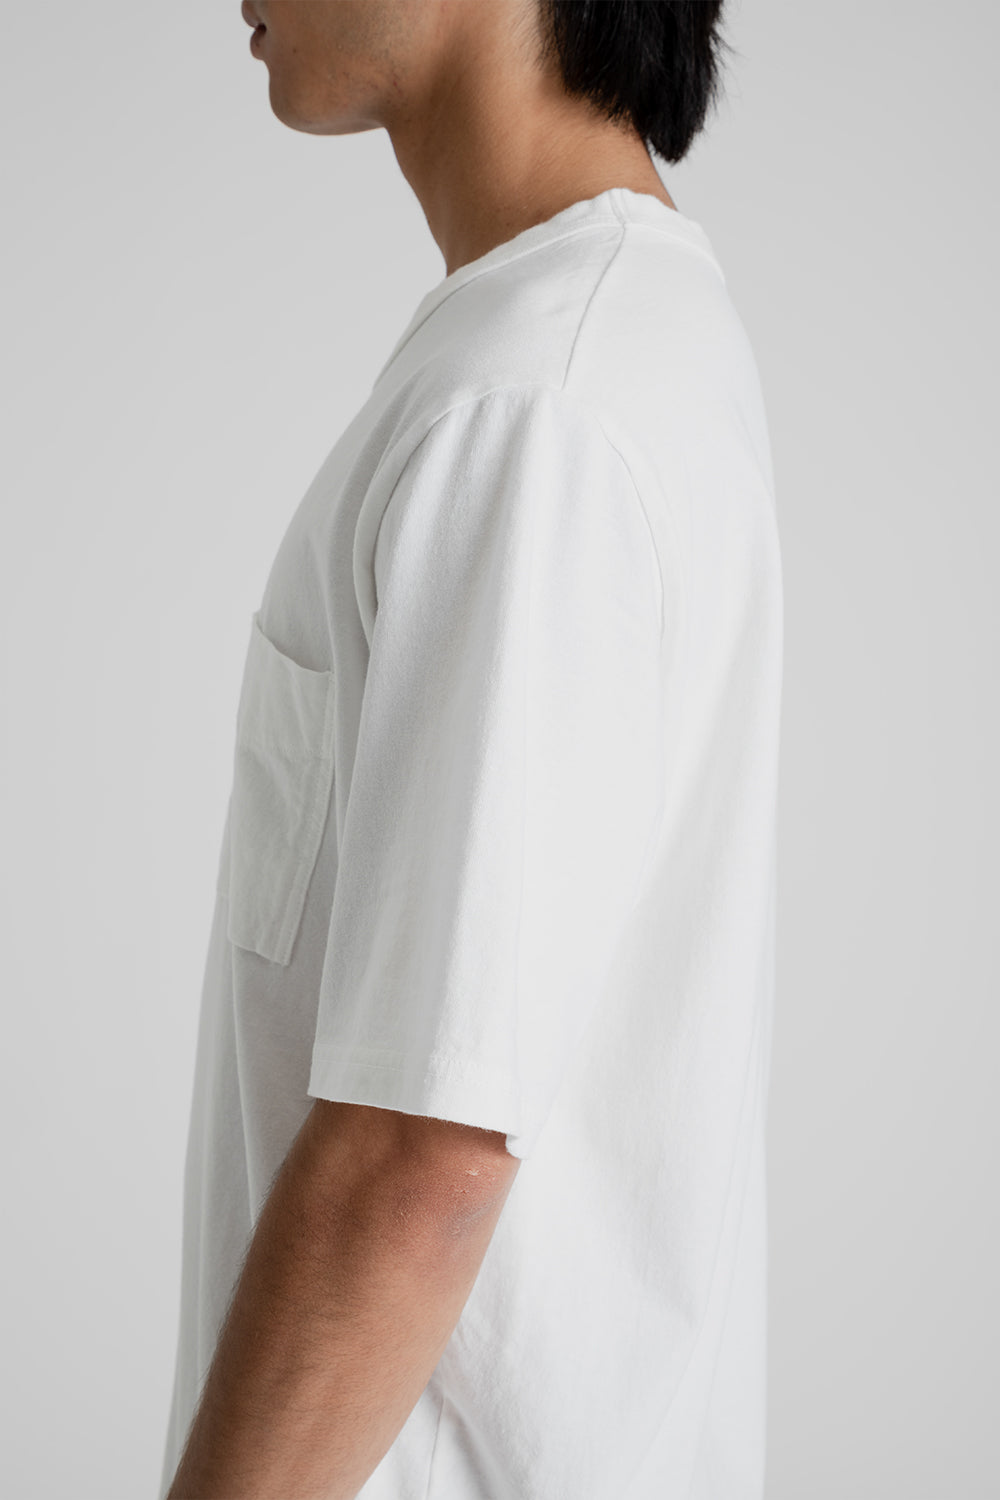 Jackman Pocket T-Shirt in White